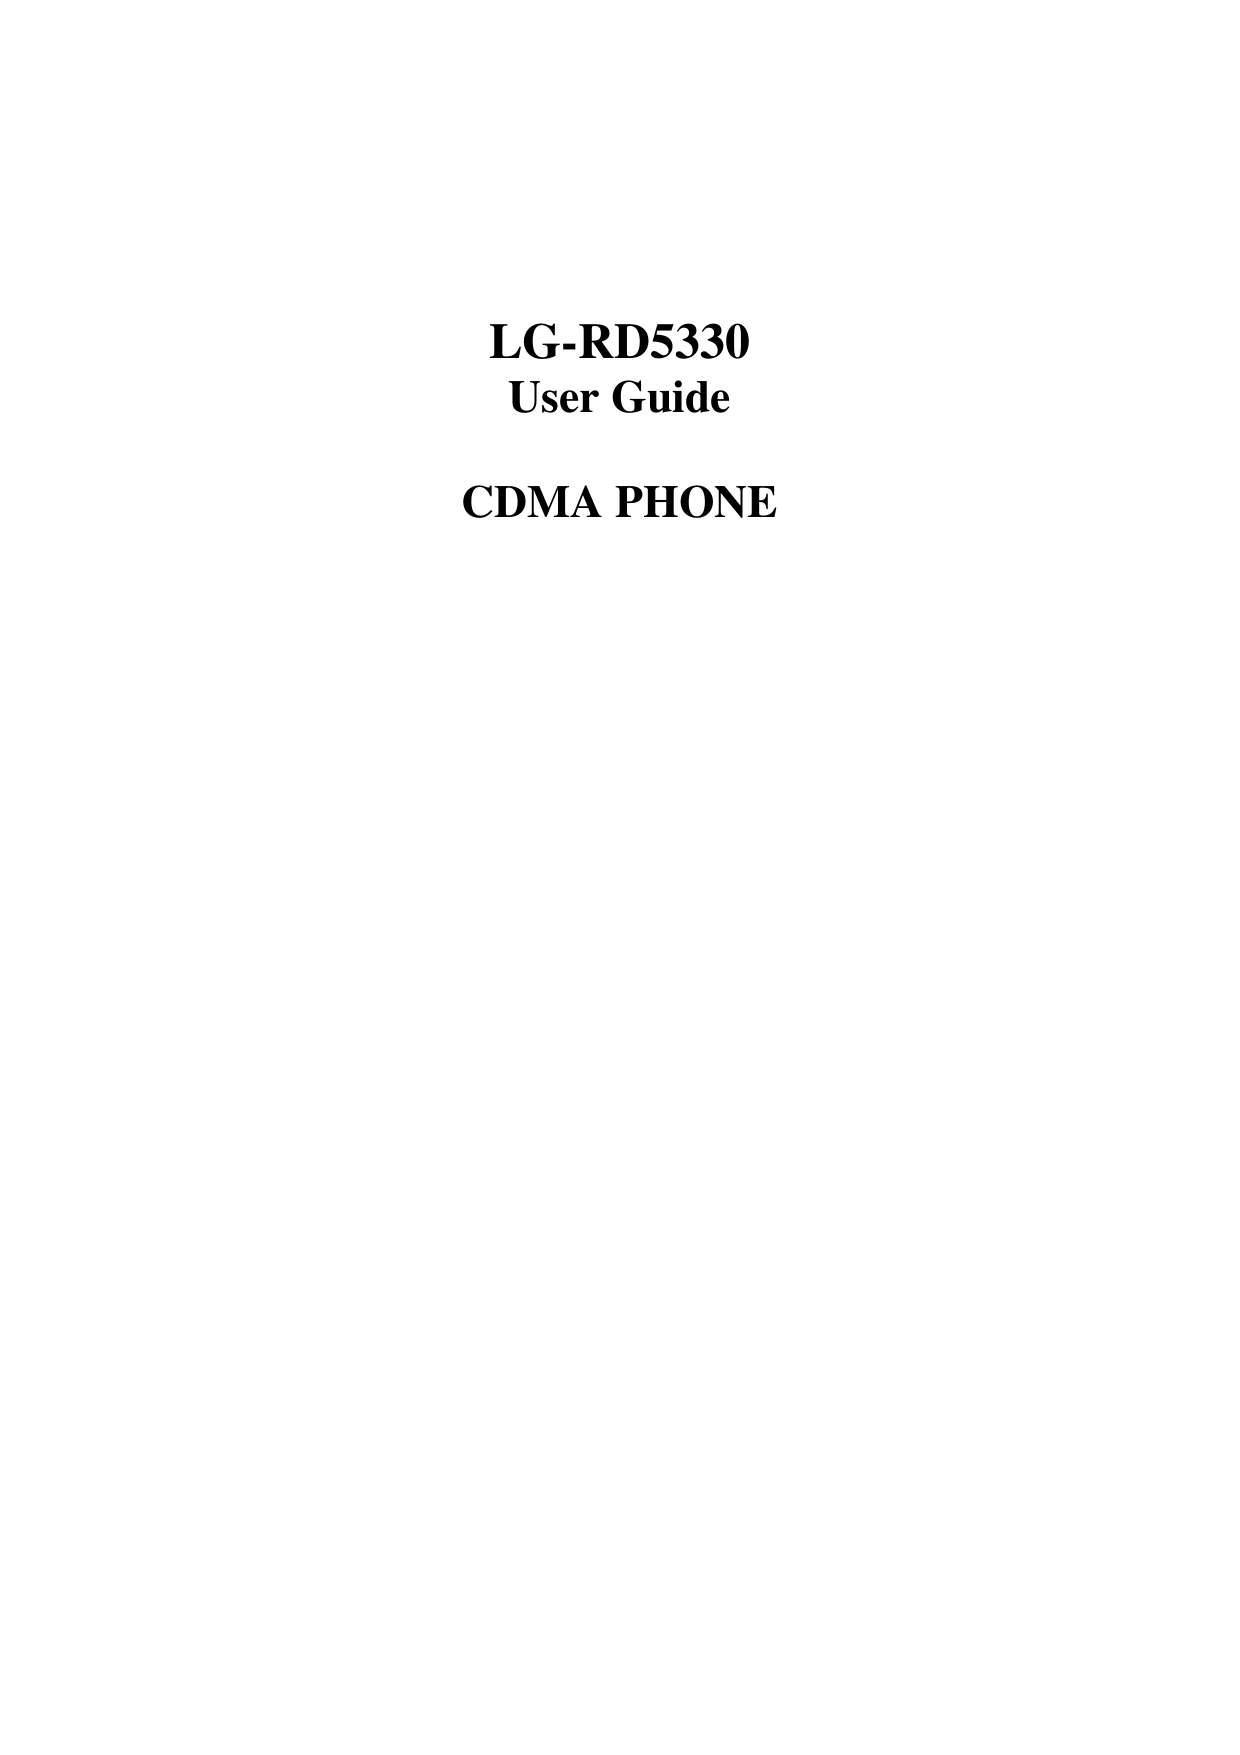   LG-RD5330 User Guide  CDMA PHONE                           